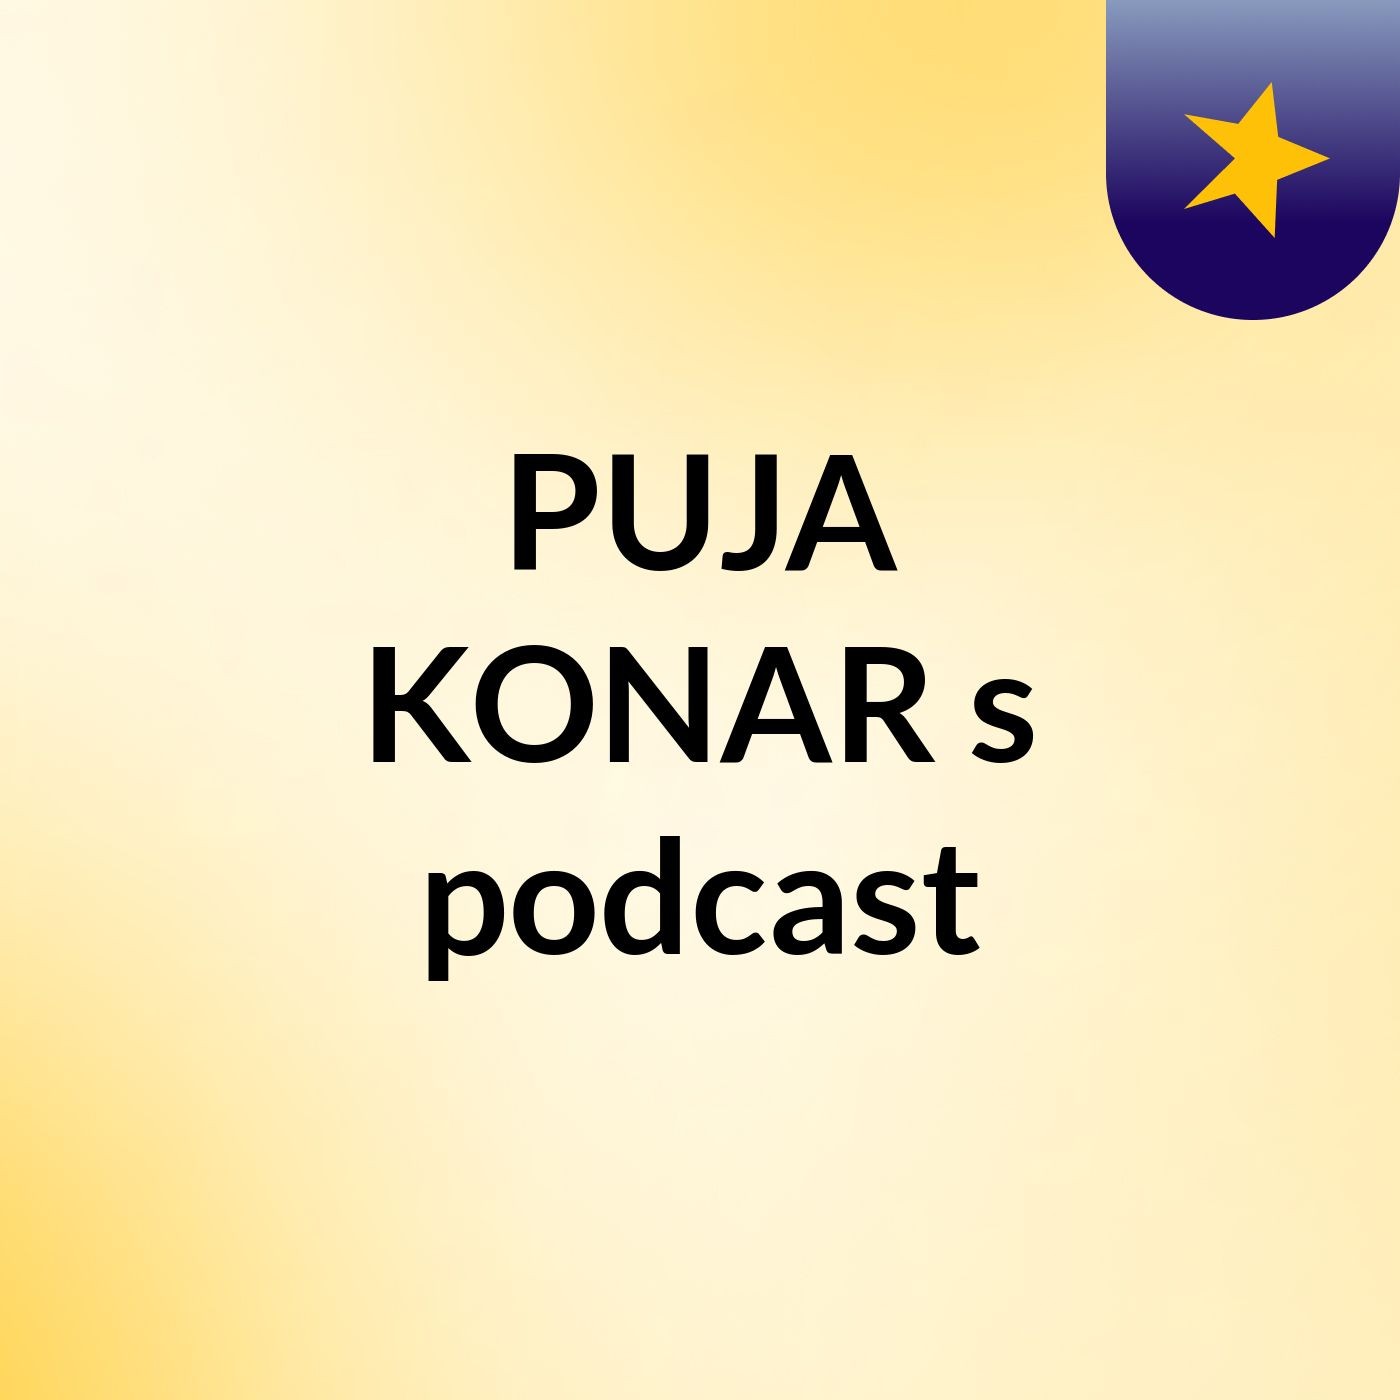 PUJA KONAR's podcast